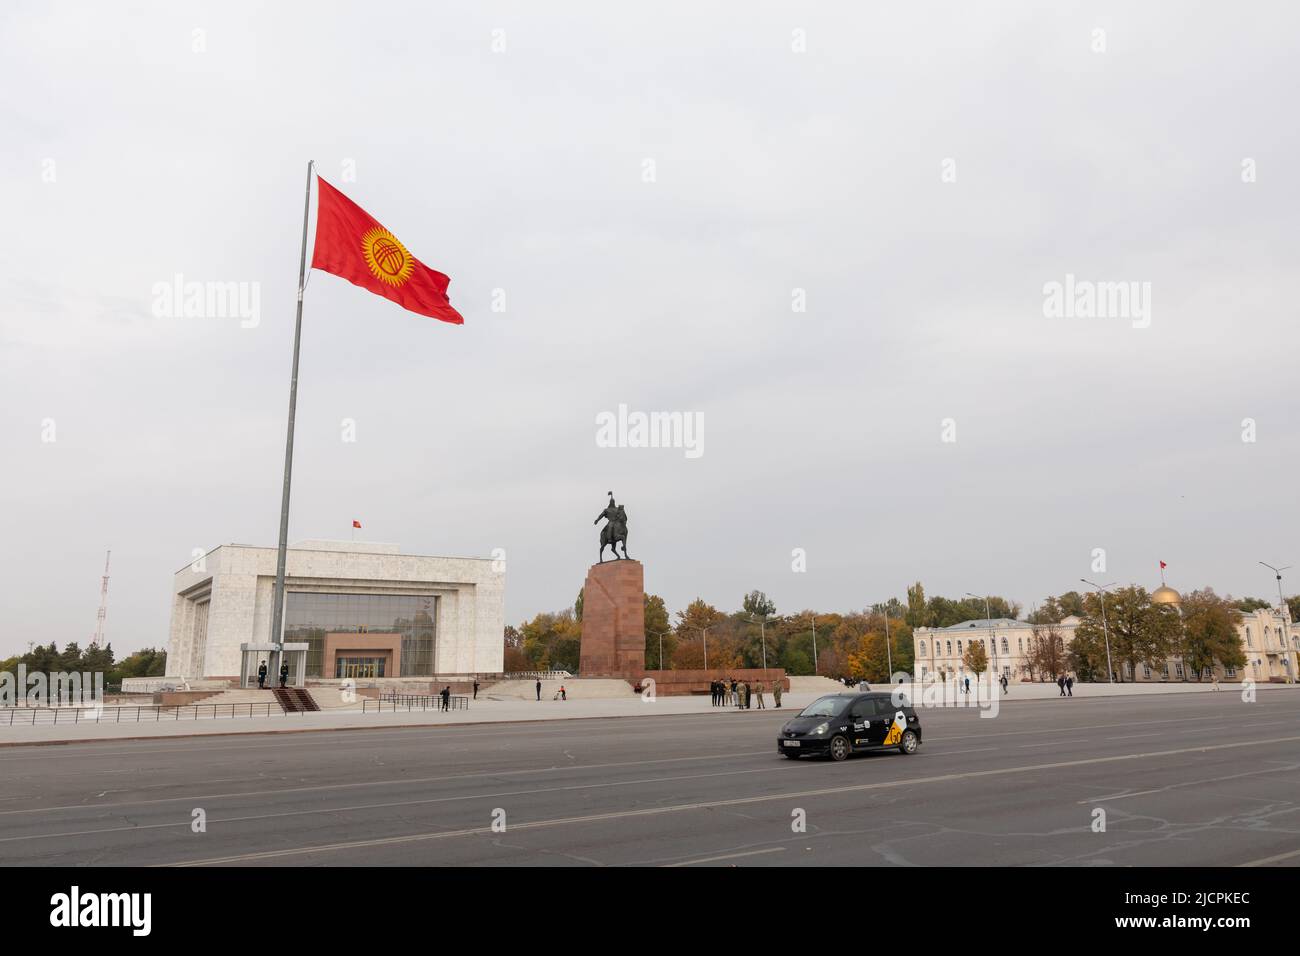 Bishkek, Kyrgyzstan - October 21, 2021: Bishkek city central square with Kyrgyzstan national flag. The capital city of Kyrgyz Republic Stock Photo